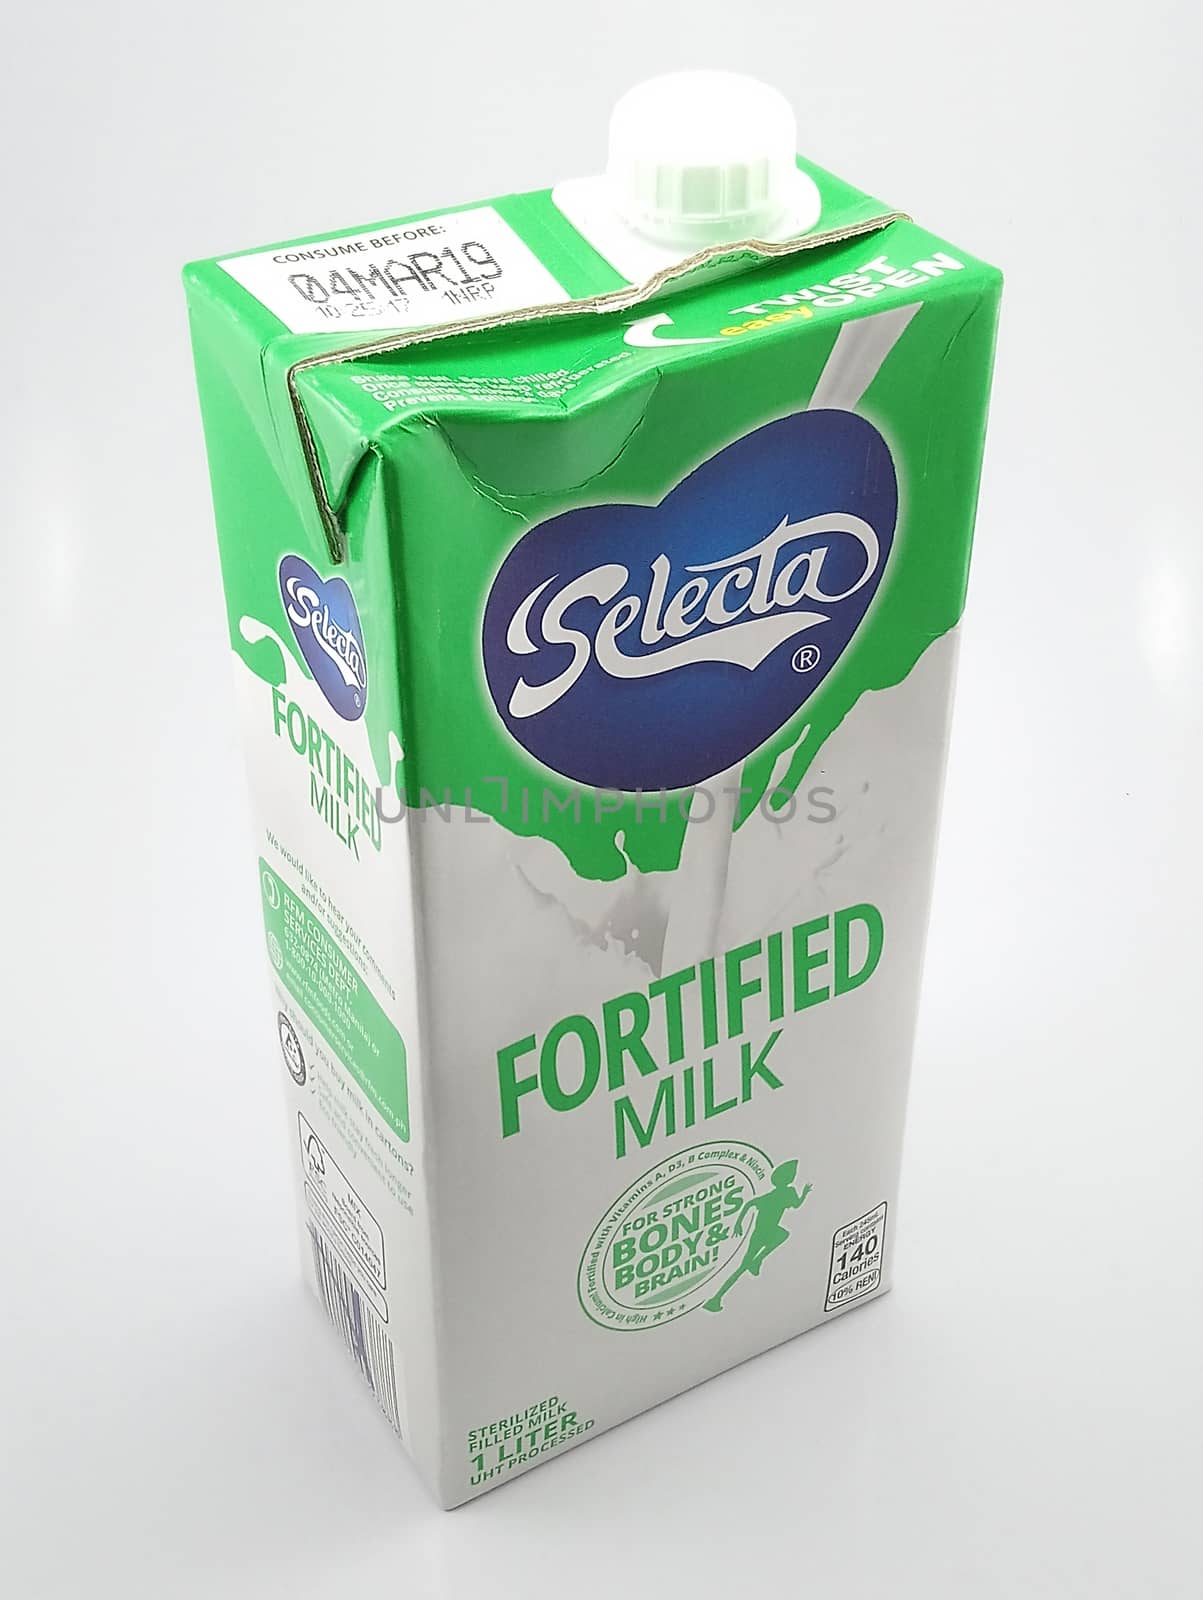 MANILA, PH - SEPT 21 - Selecta fortified milk box on September 21, 2020 in Manila, Philippines.